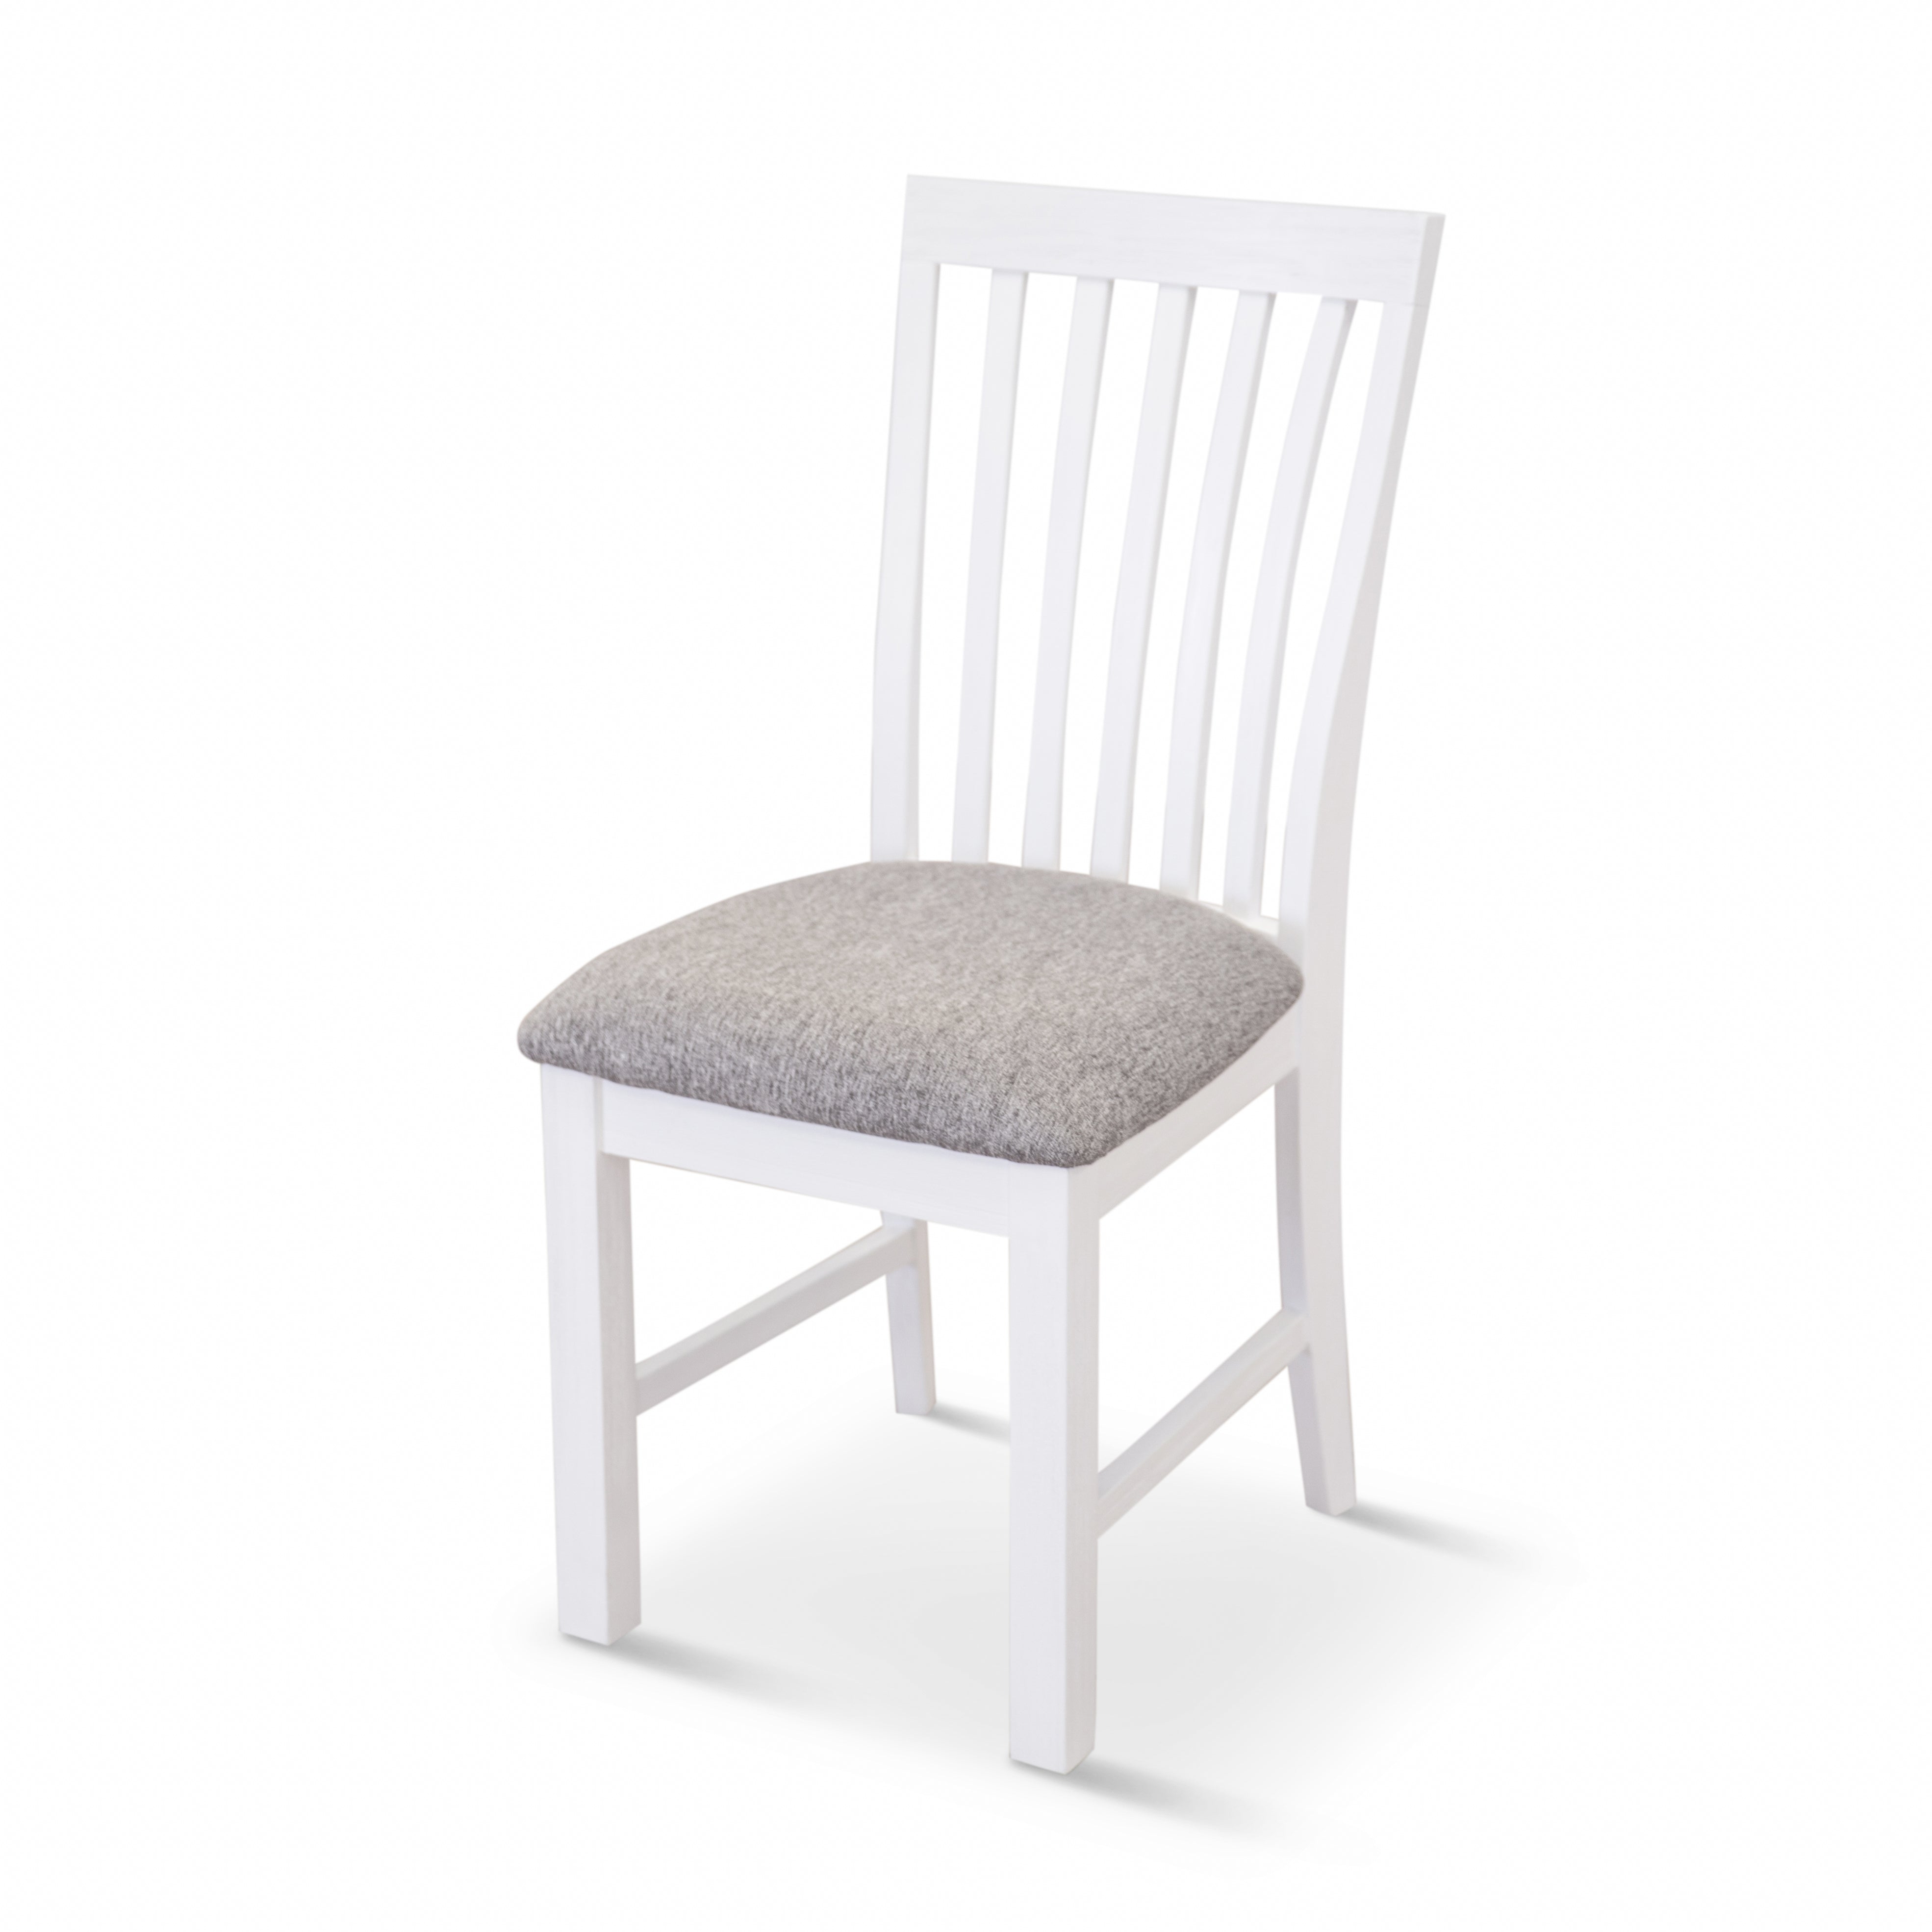 Laelia 7pc Dining Set 180cm Table 6 Chair Acacia Wood Coastal Furniture - White - SILBERSHELL